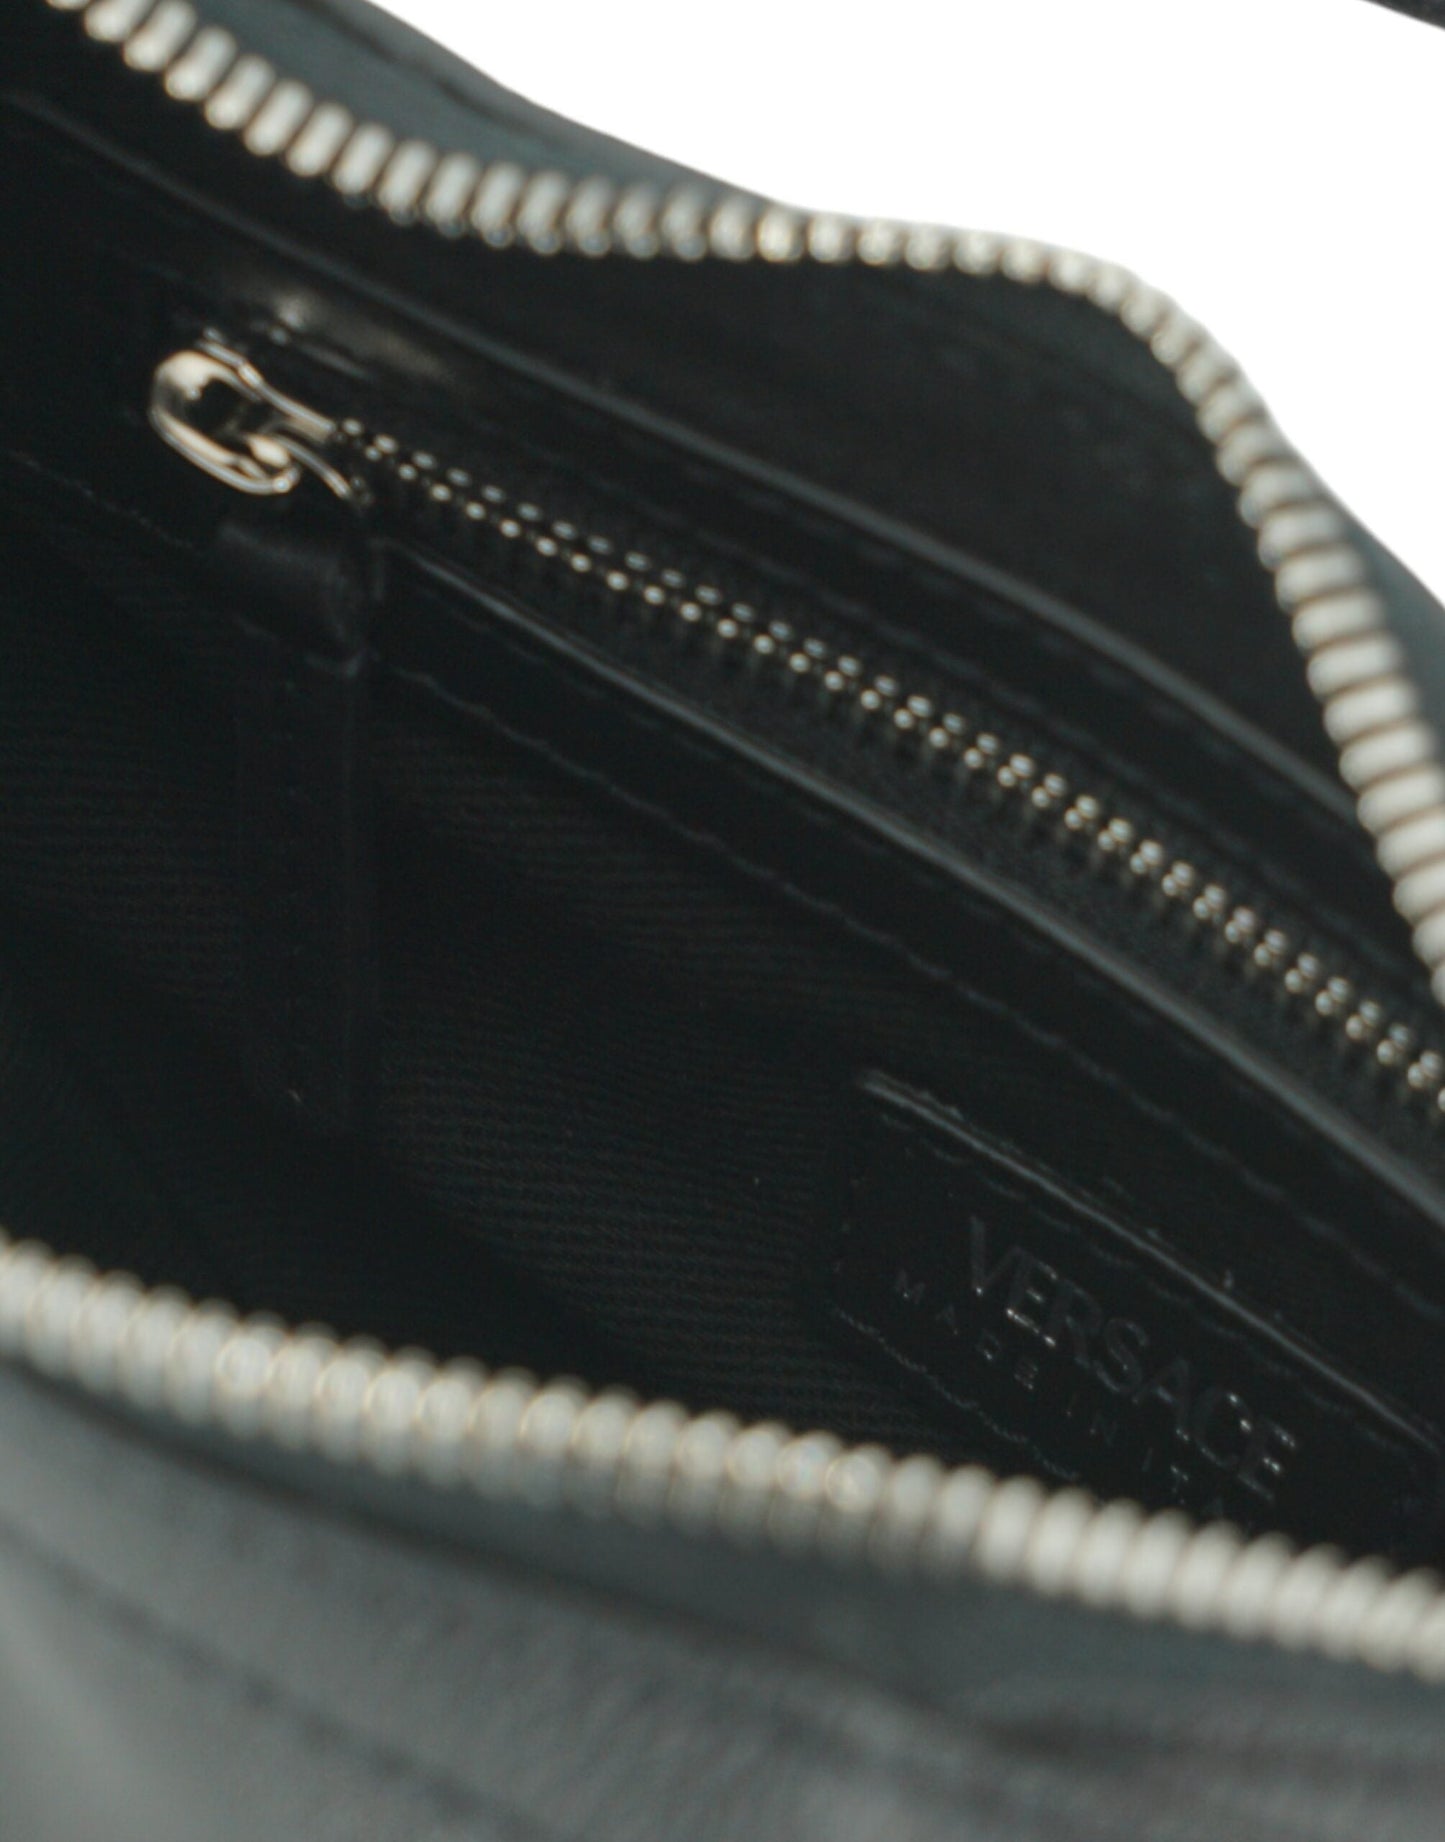 Fashionsarah.com Fashionsarah.com Versace Black Calf Leather Hobo Mini Shoulder Bag